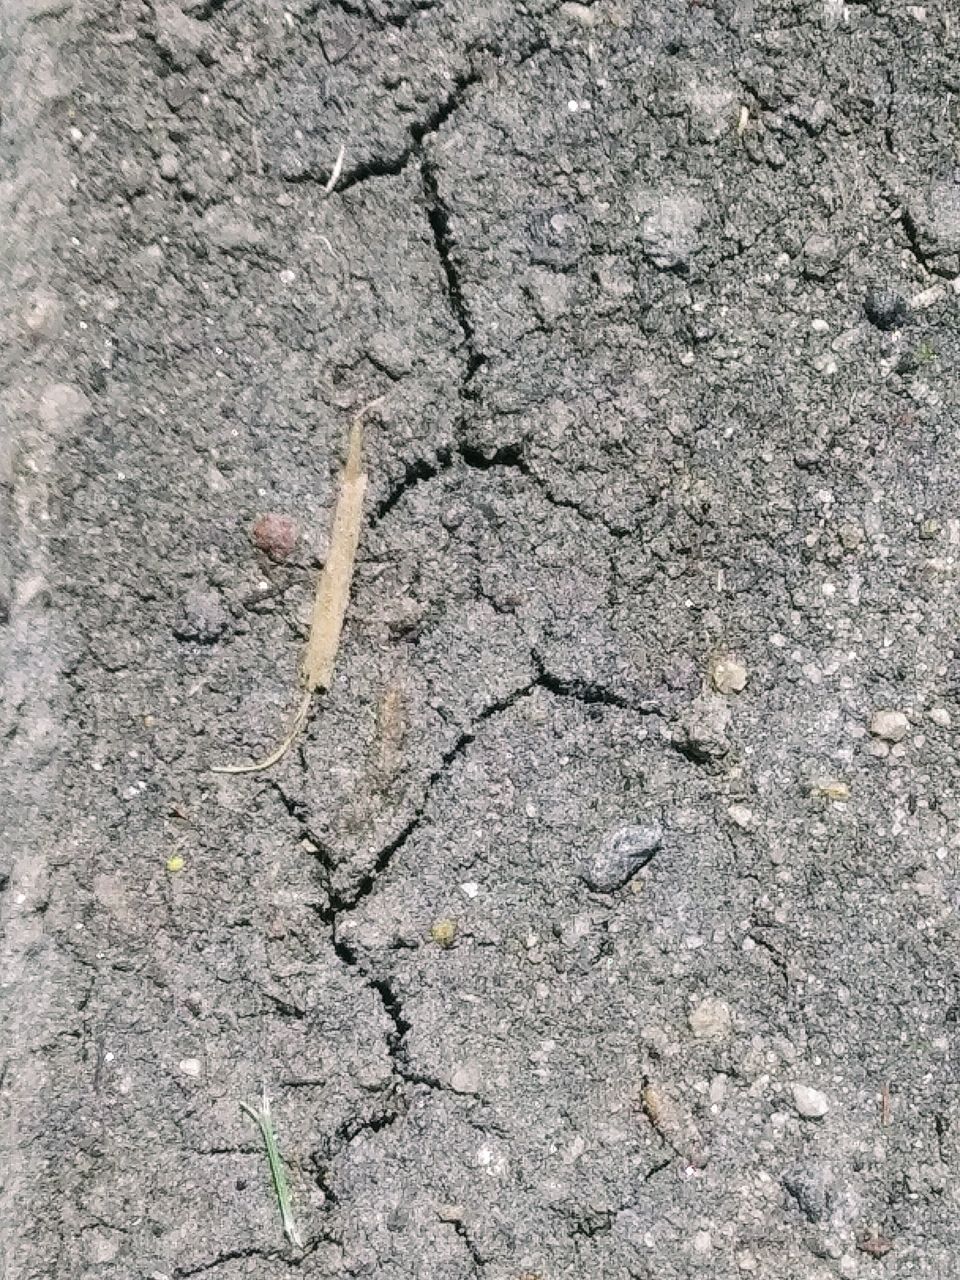 mud cracks at the curb